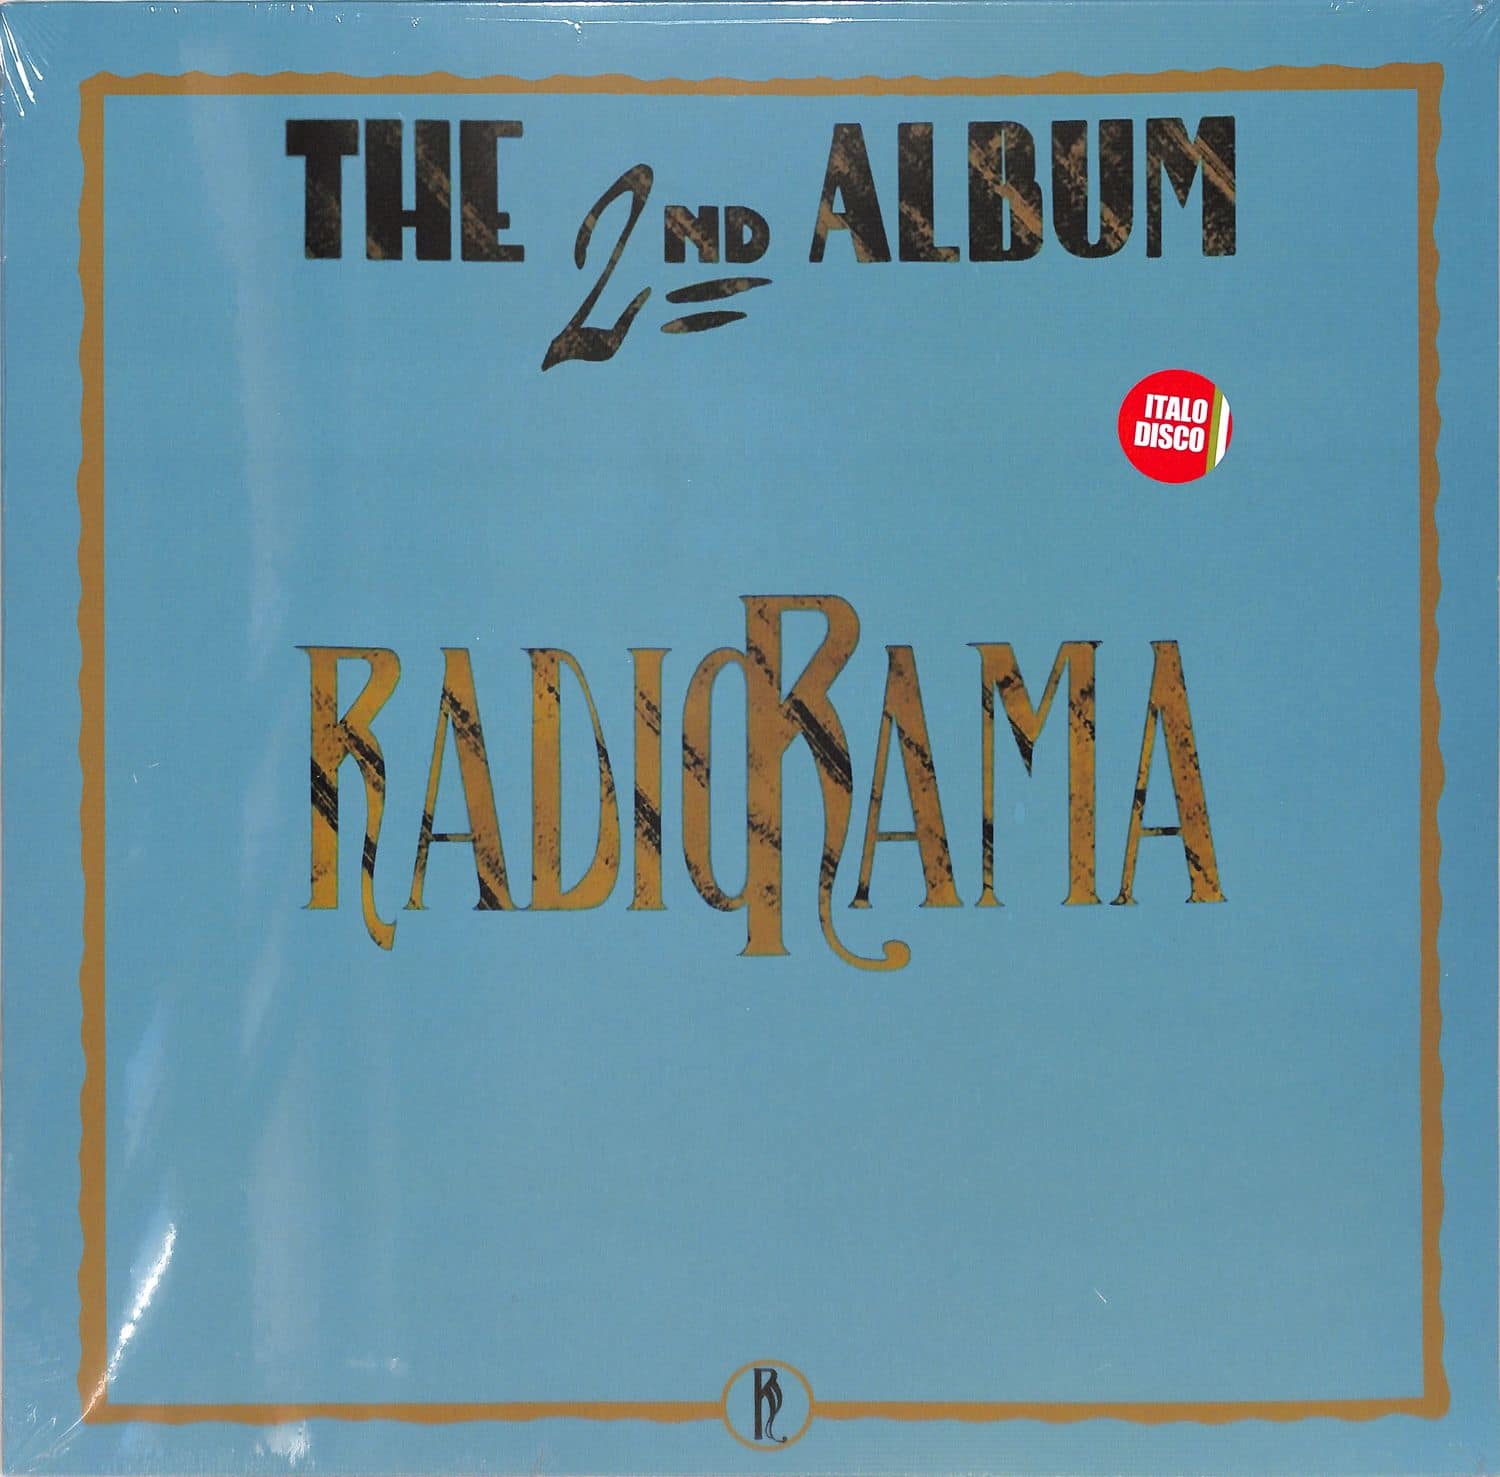 Radiorama - THE 2ND ALBUM 